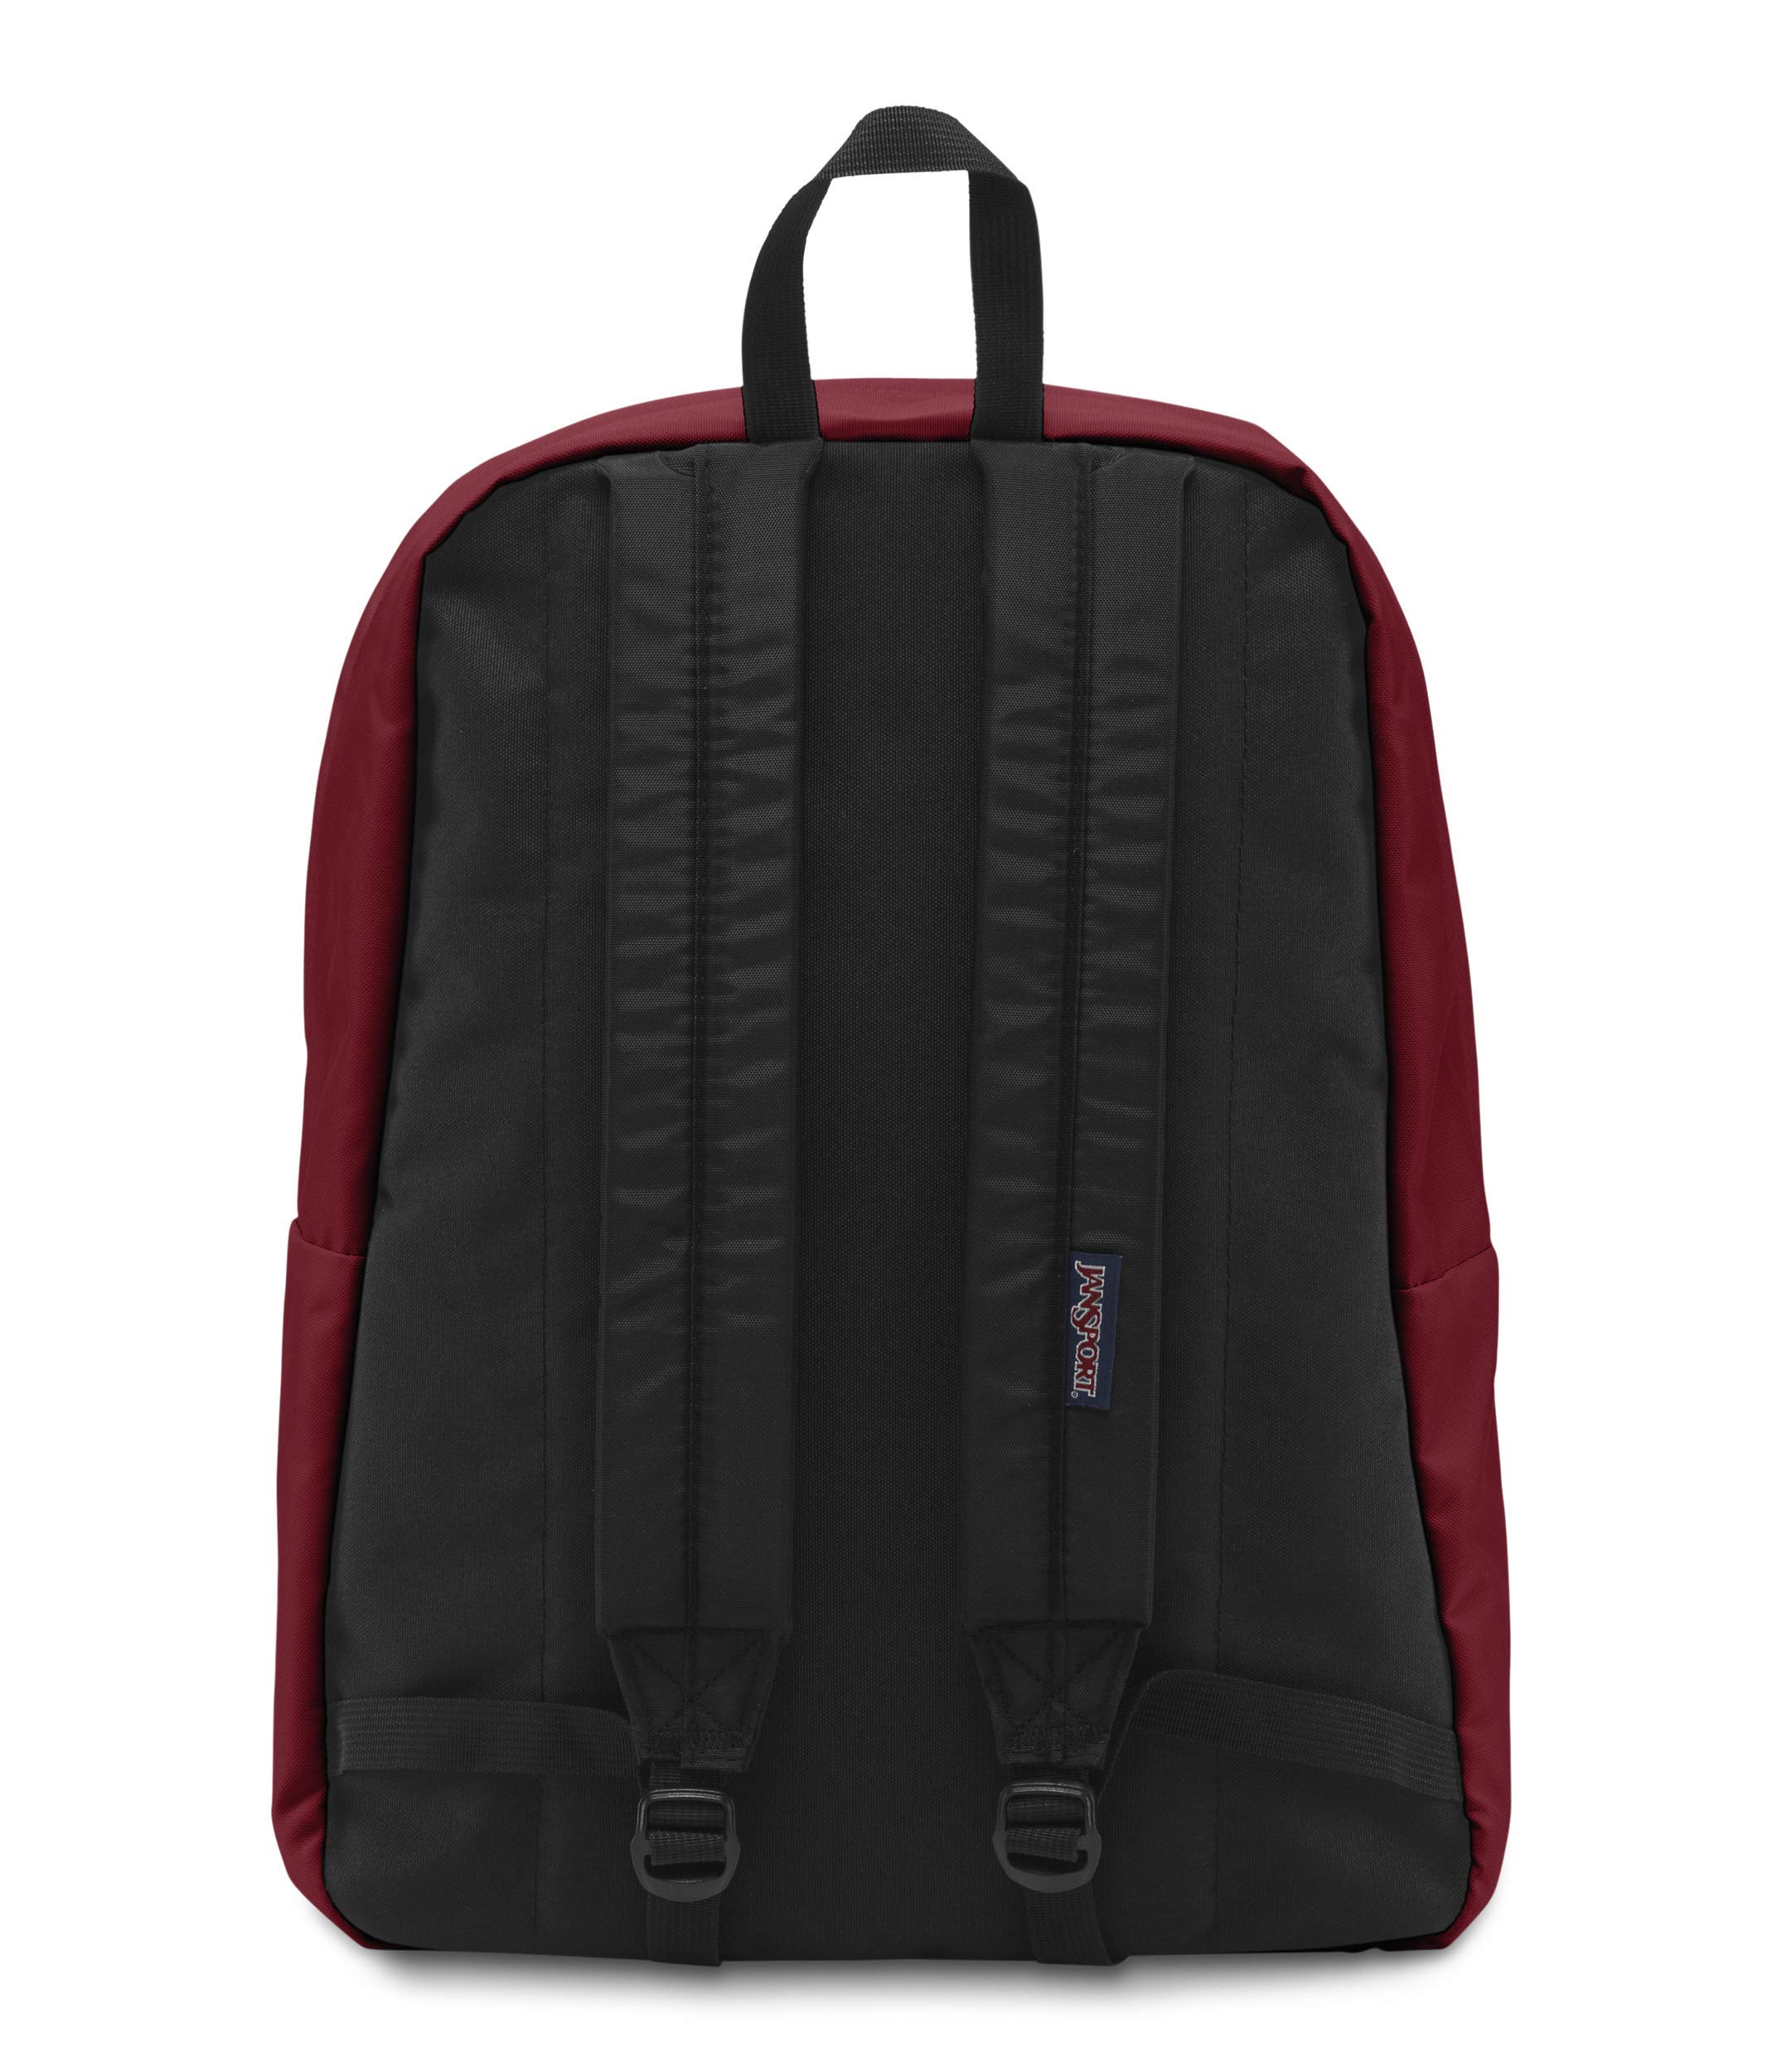 JanSport SuperBreak Classic Backpack Viking Red - image 3 of 7